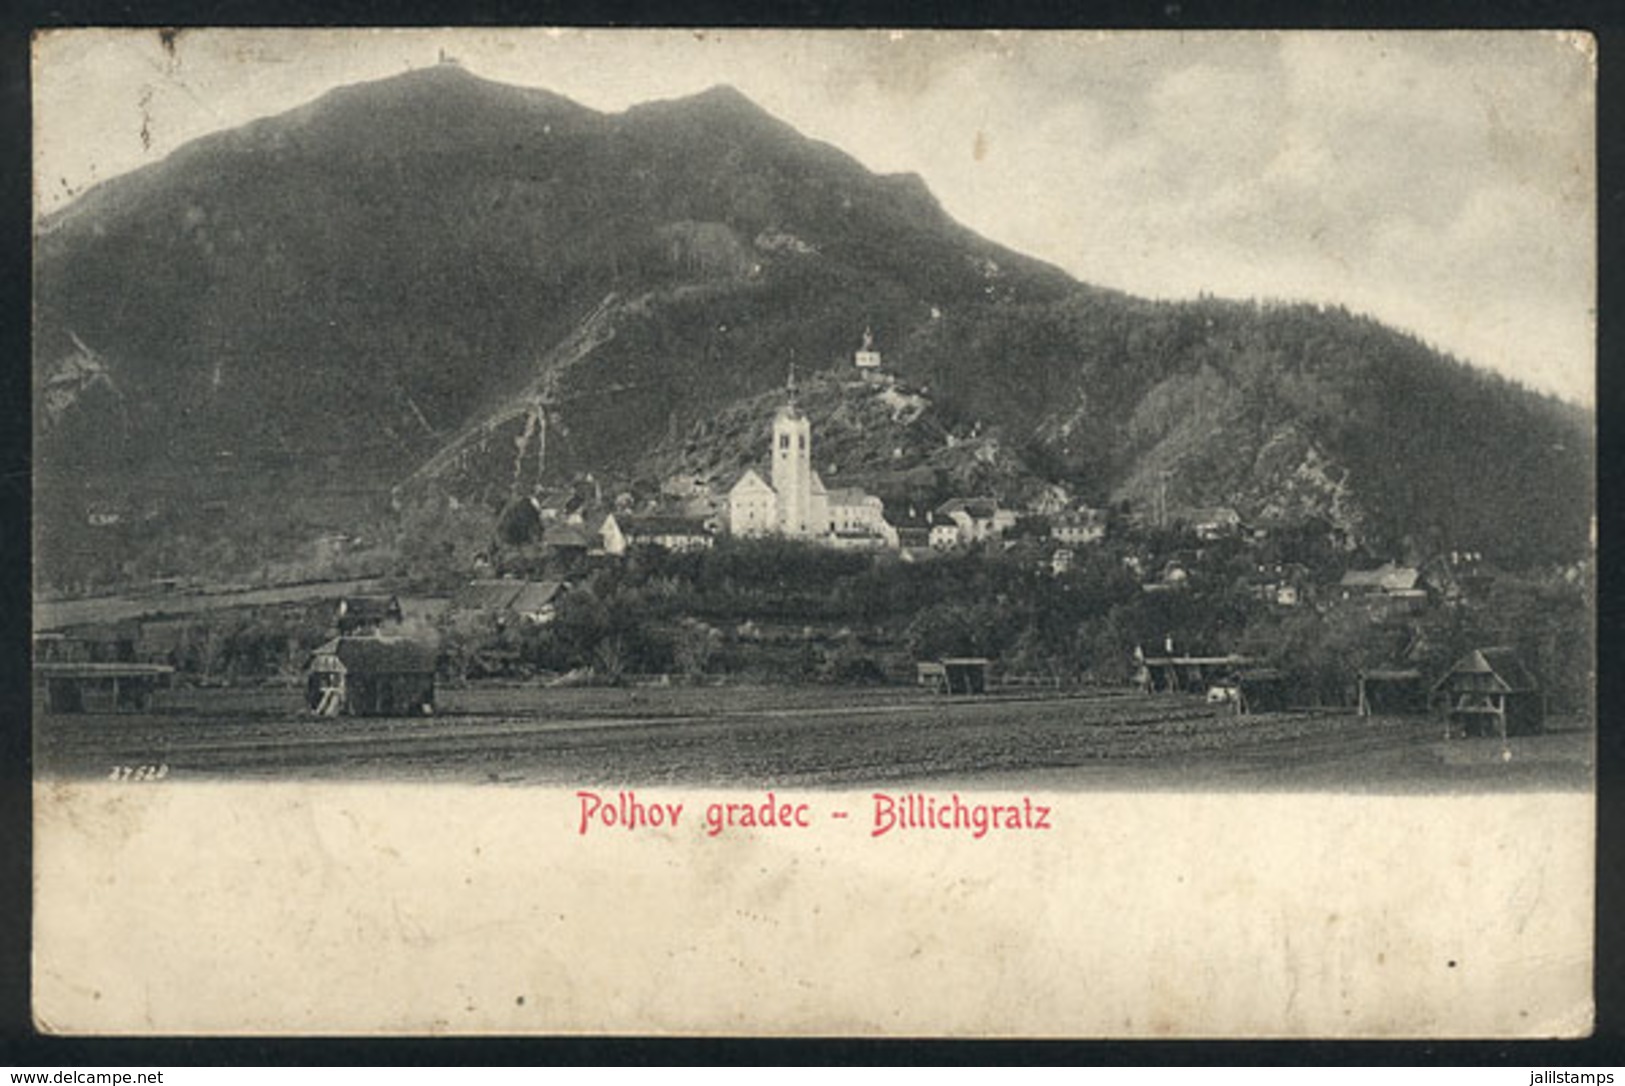 868 SLOVENIA: POLHOV GRADEC: Billichgratz Castle, Circa 1911, Nice View - Slovenia